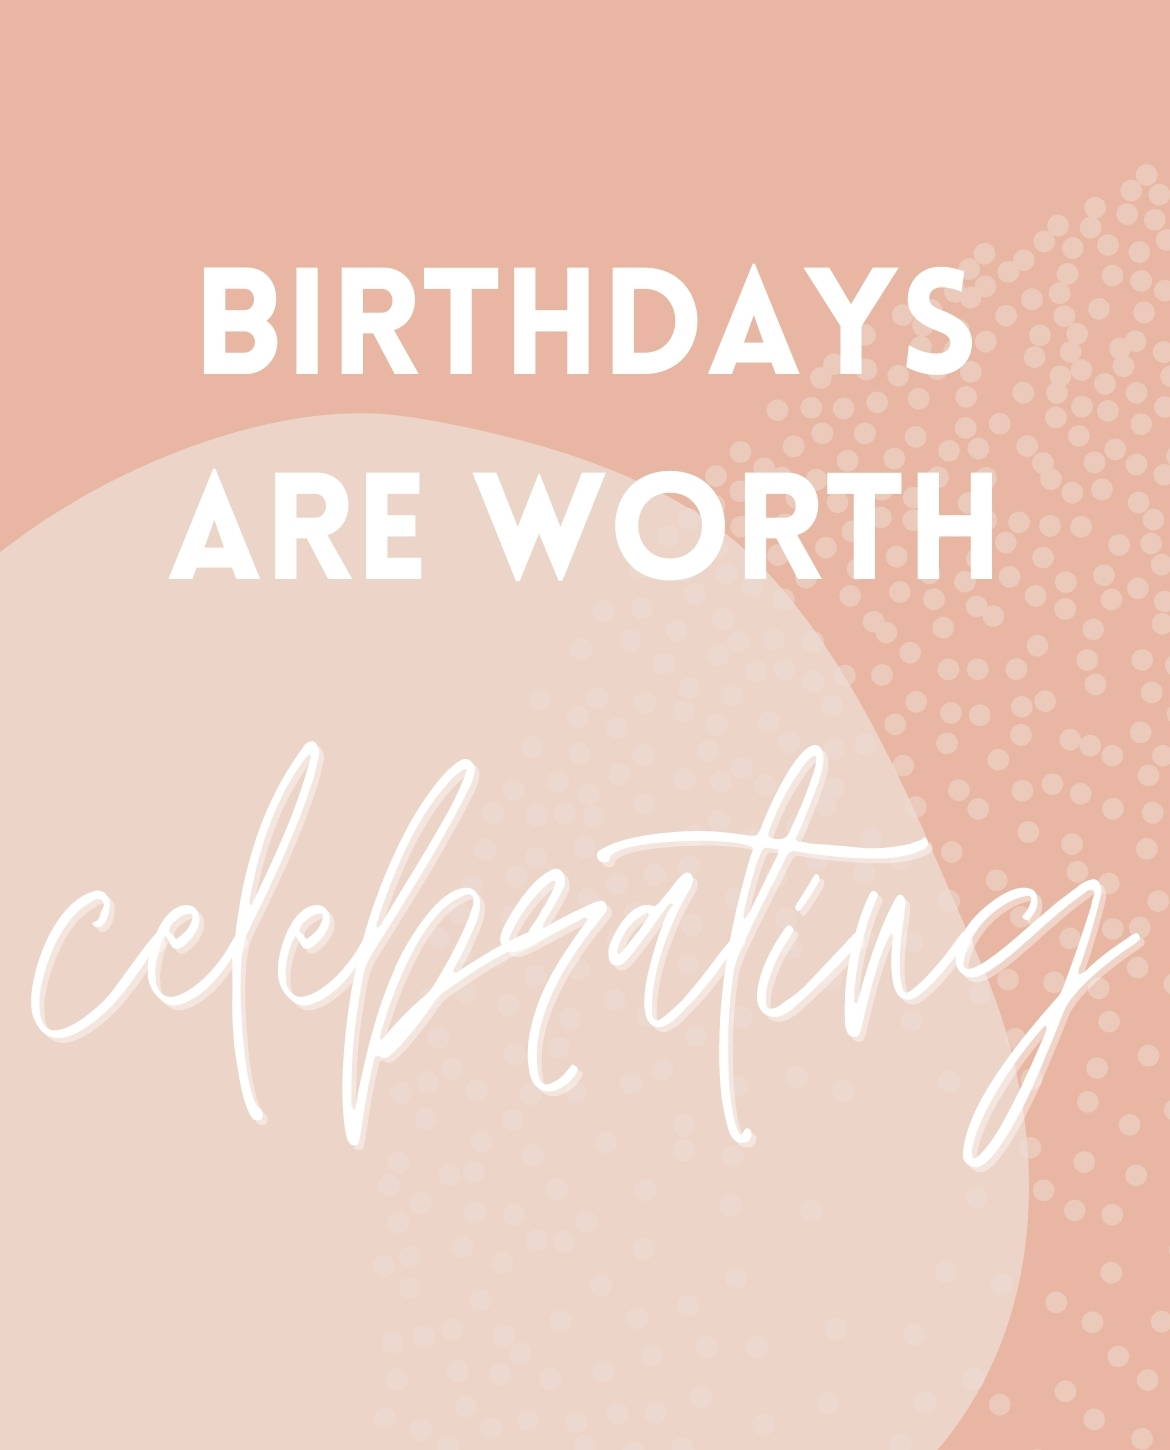 Birthdays are worth celebrating.